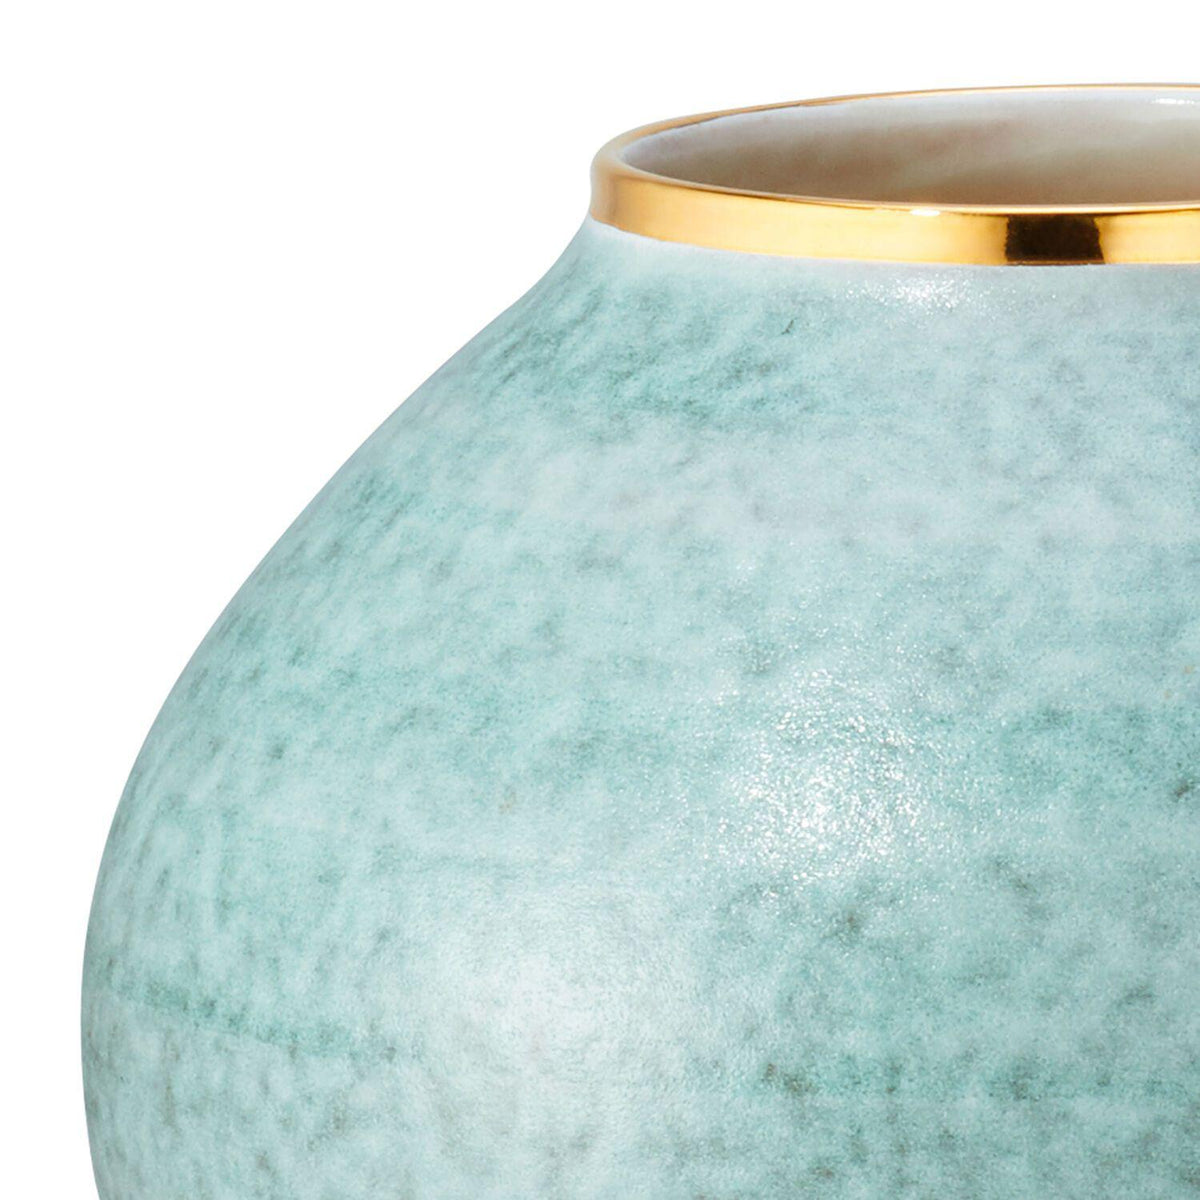 Calinda Moon Vase